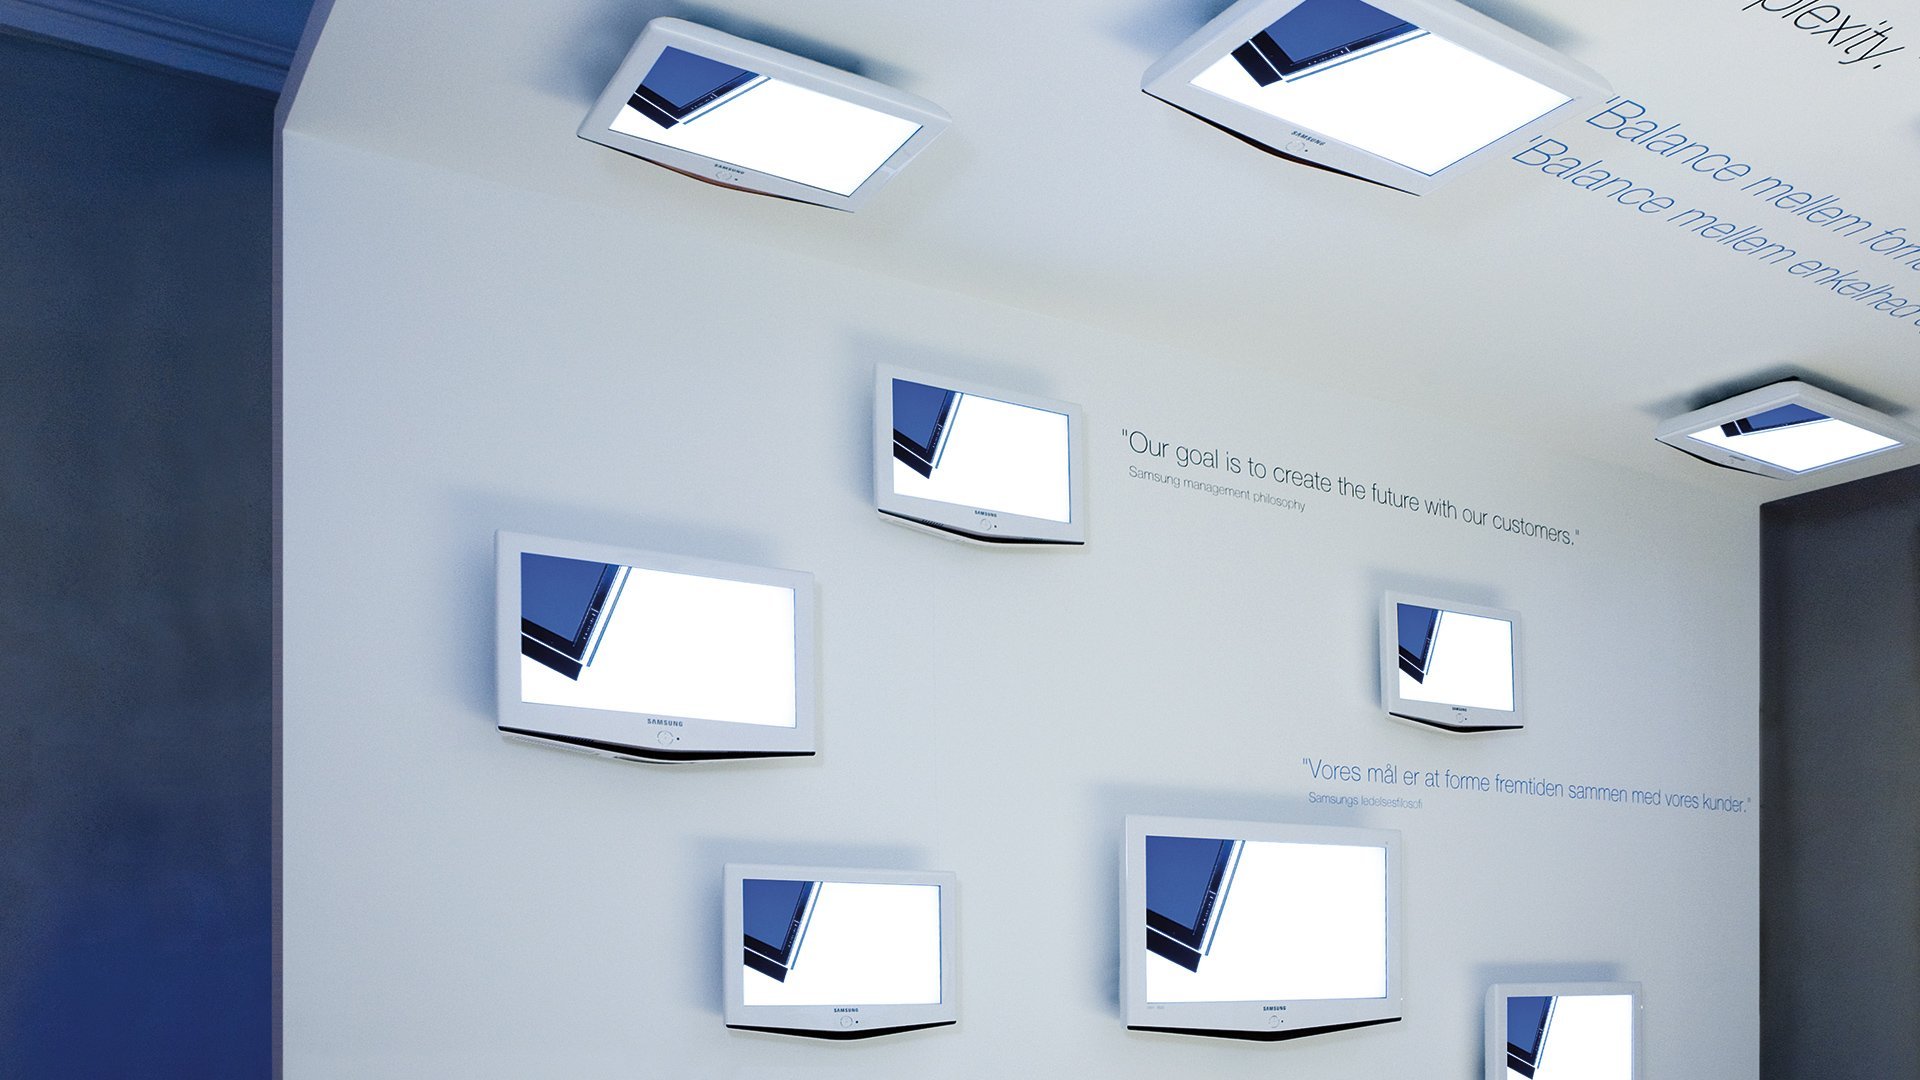 Samsung product image on display by LOOP Associates